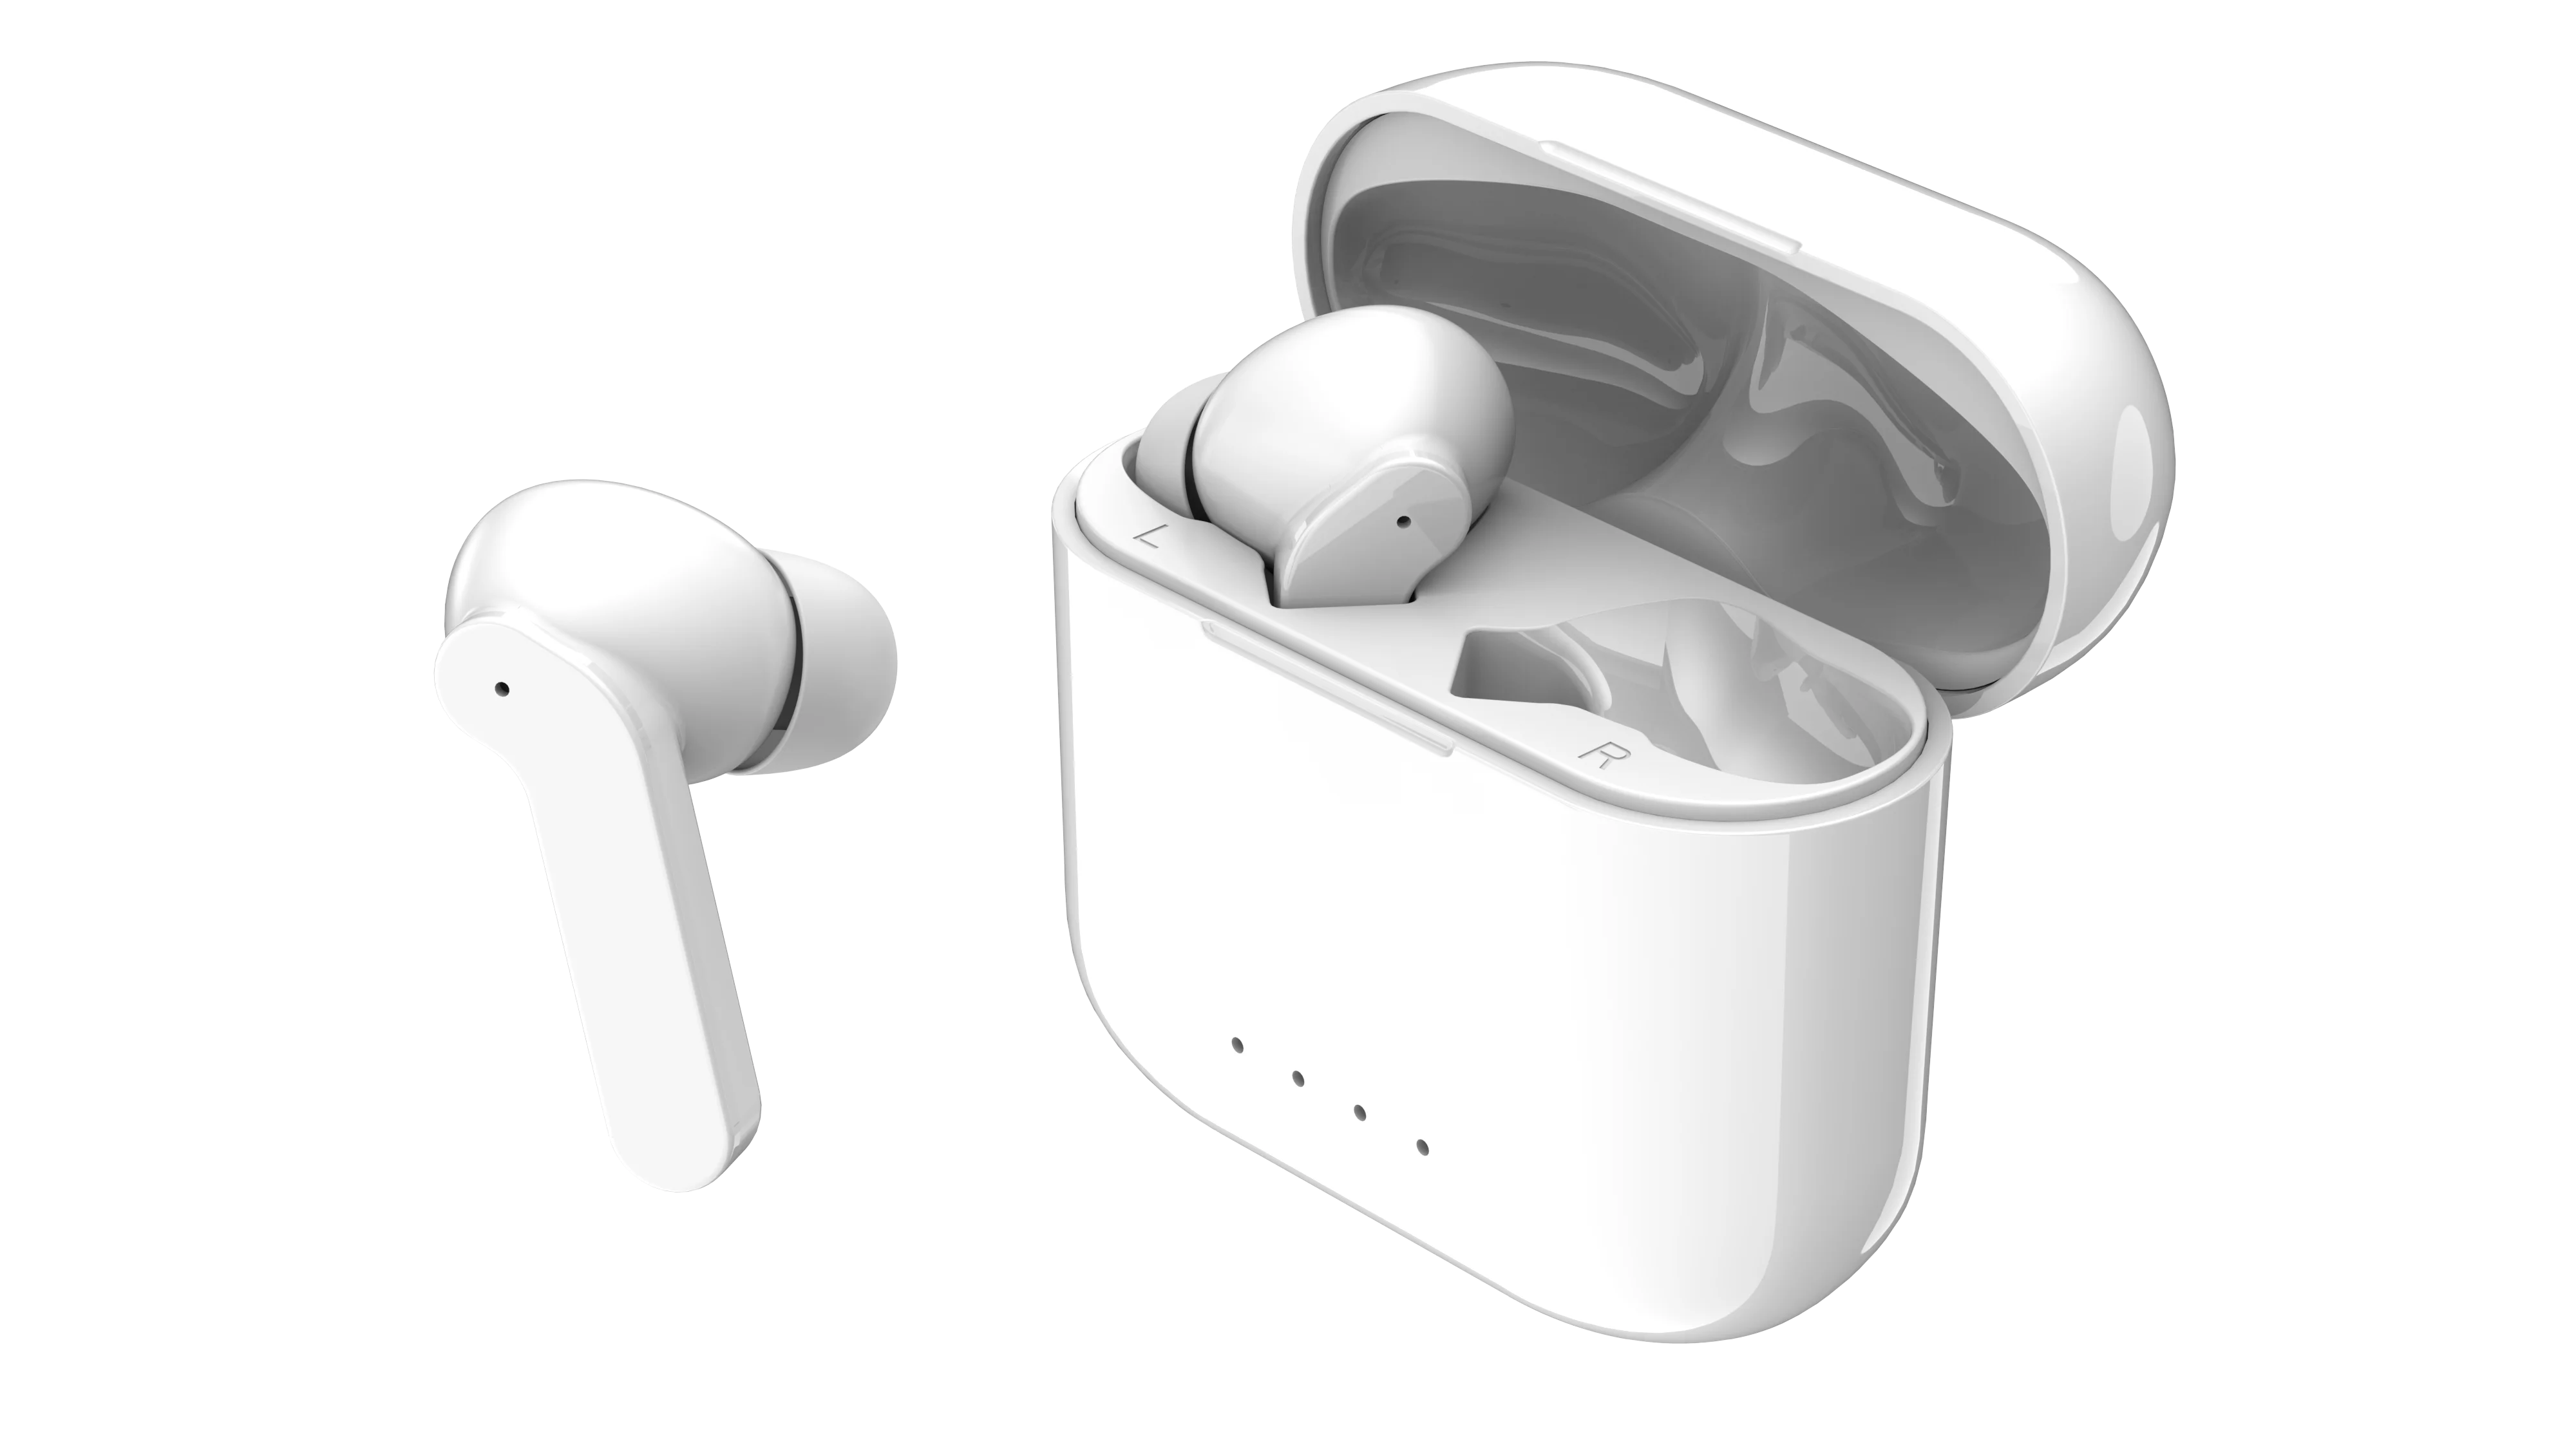 Oem IPX-7 Waterproof Wholesale Price TWS Stereo Sport Earphones in Stock Earbuds Headset Wireless Earphone